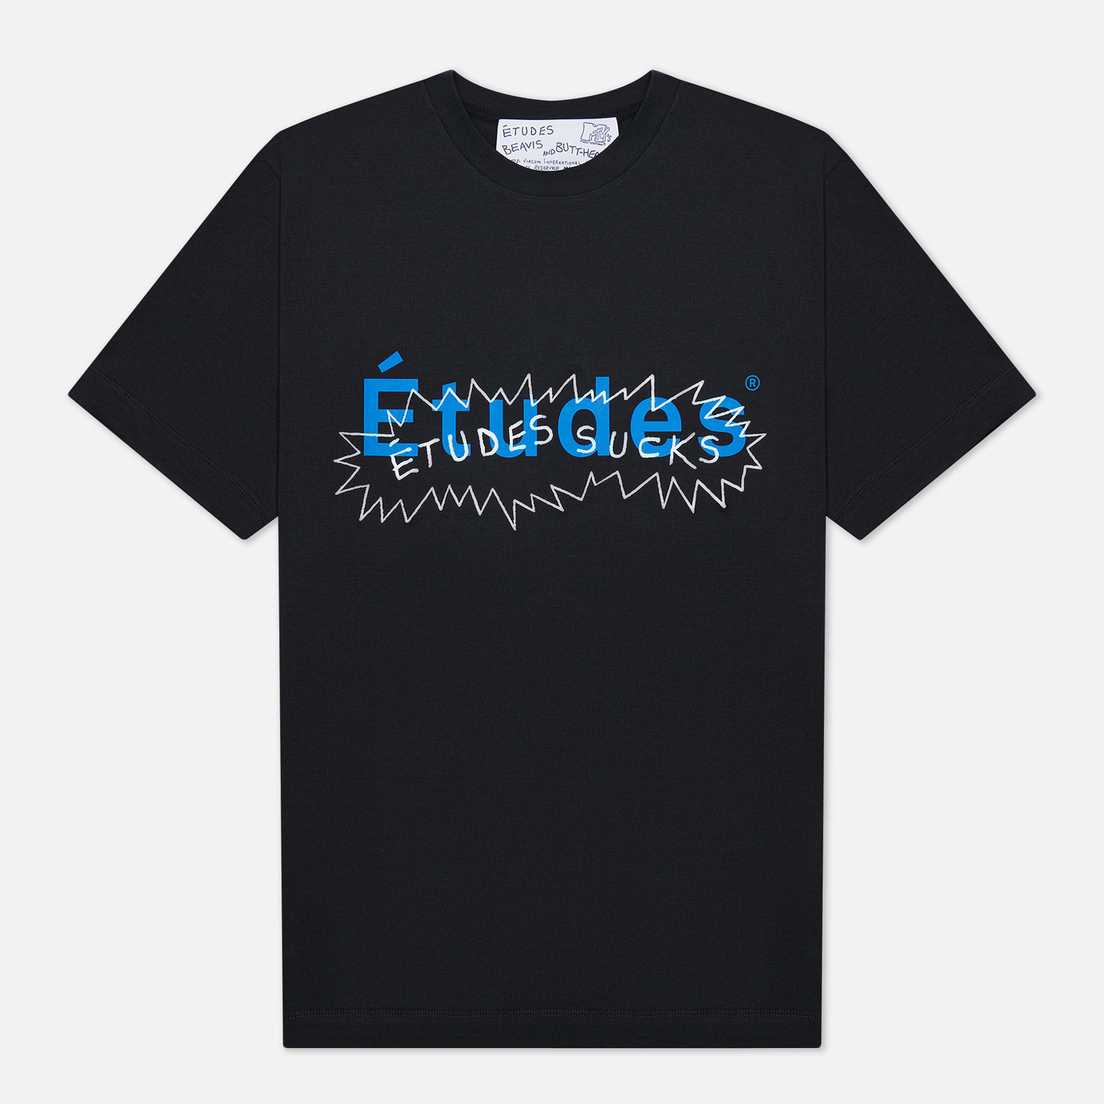 Etudes Мужская футболка x Beavis & Butt-Head Wonder Etudes Sucks